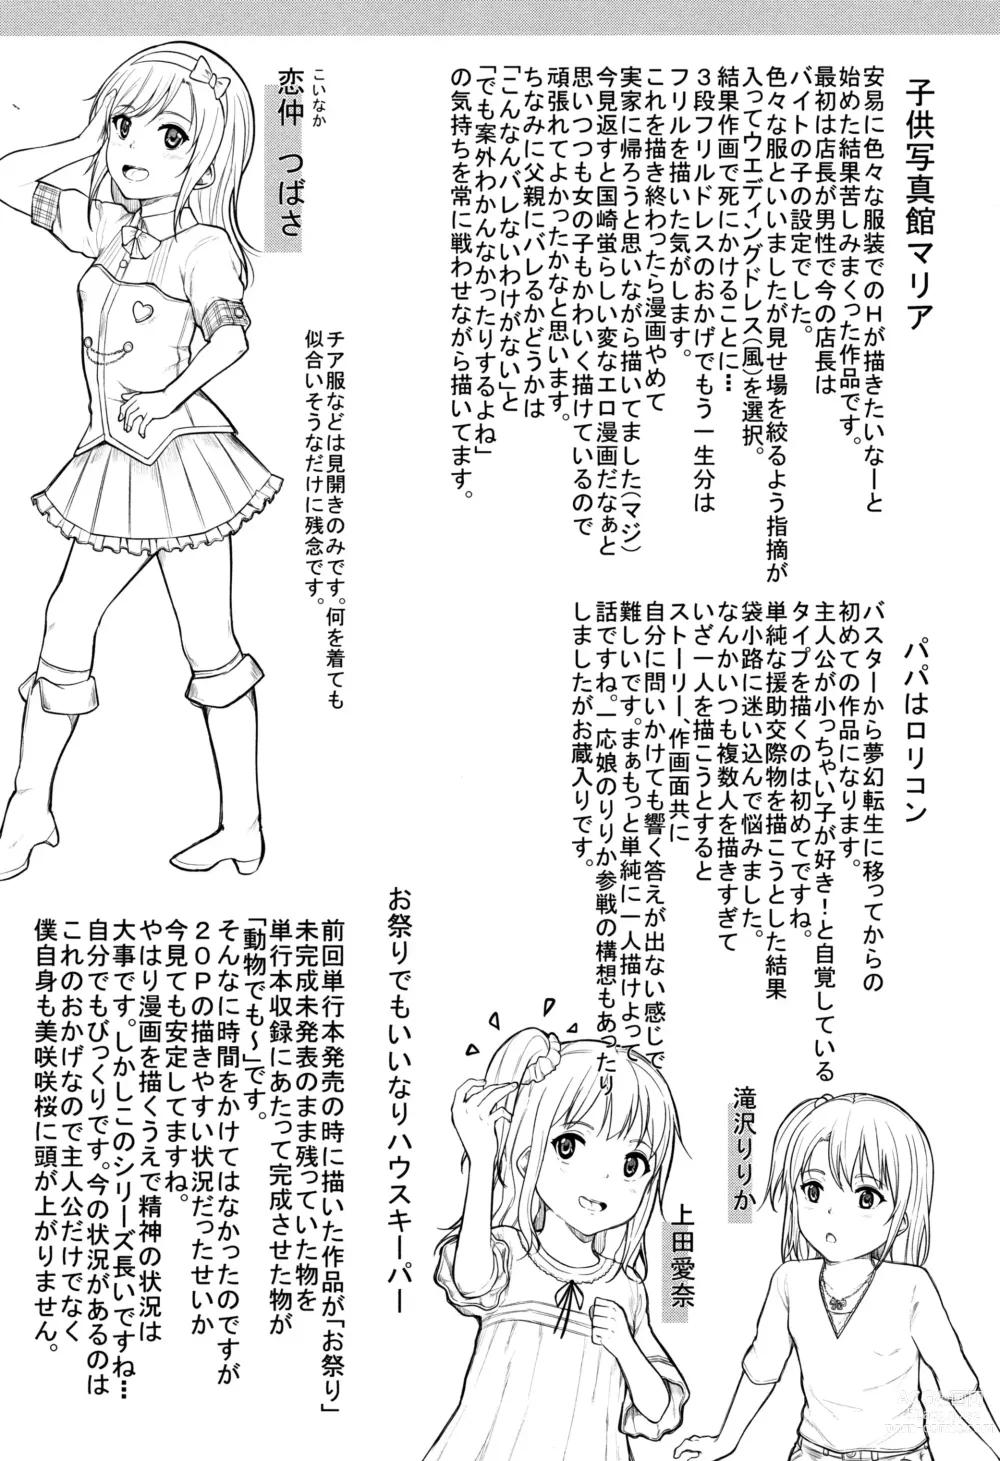 Page 153 of doujinshi Minna Chicchakute Minna Ecchi - kunisaki kei